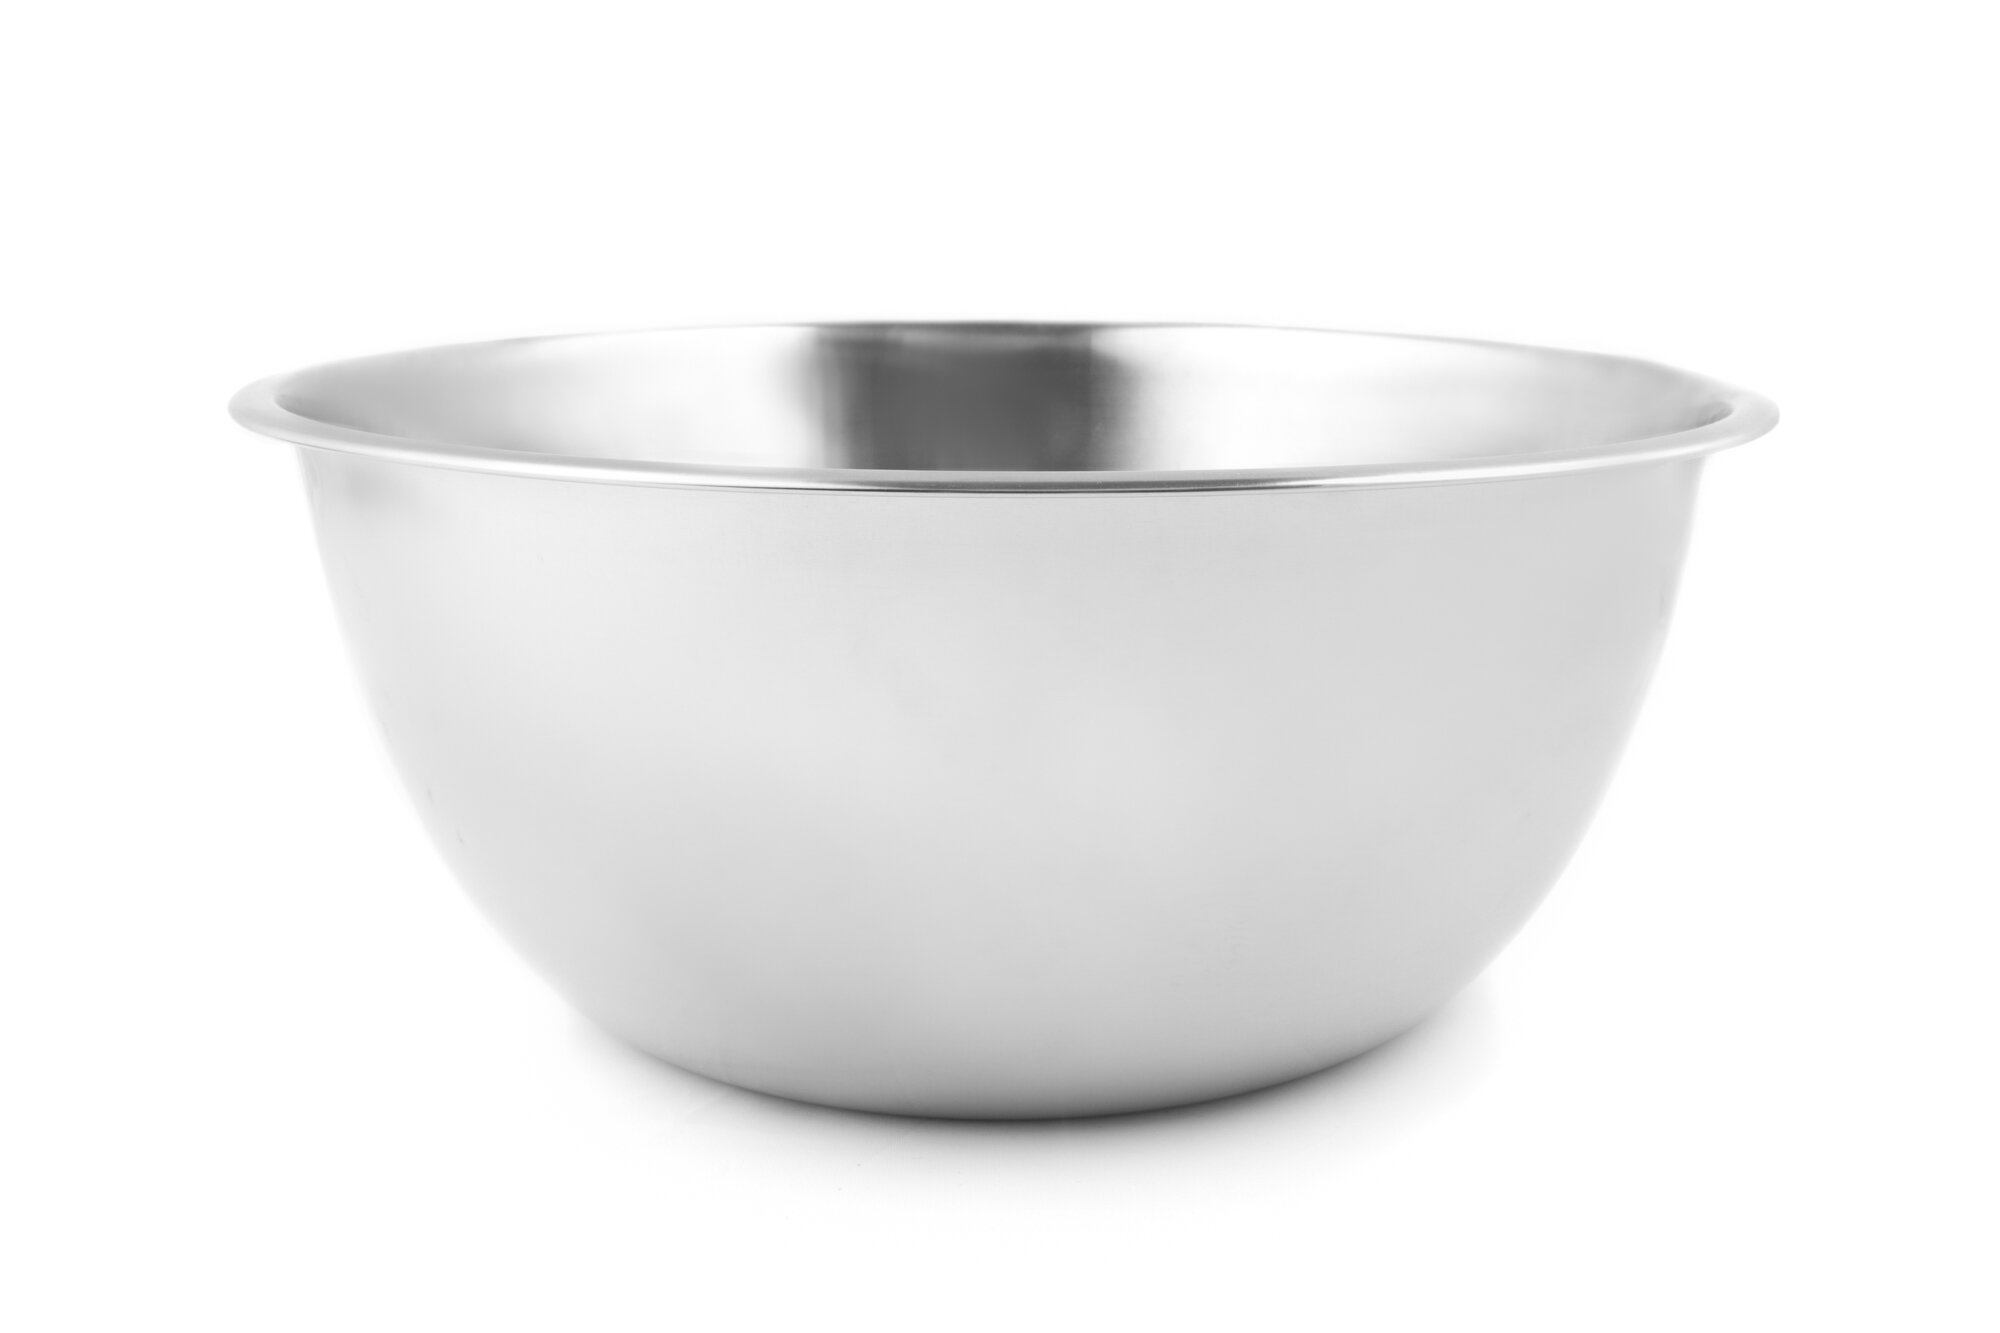 Fox Run Brands Large Mixing Bowl, Stainless Steel, 10.75-Quart